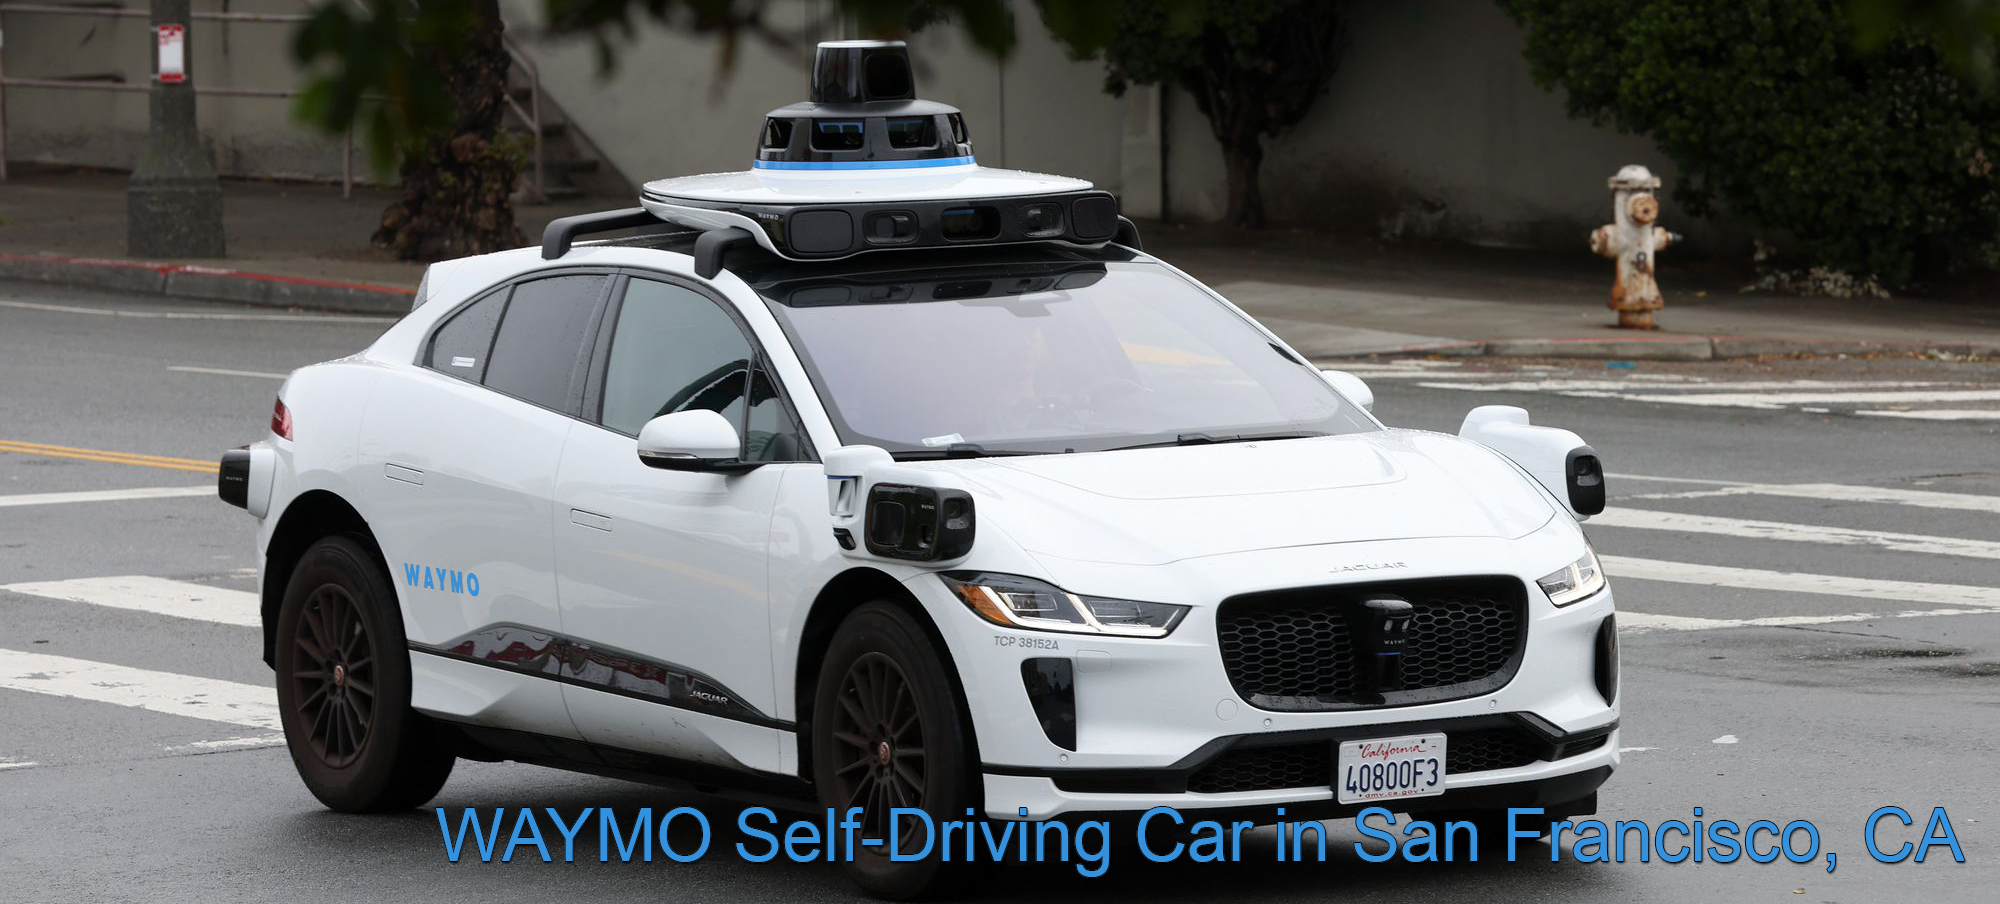 waymo - driverless car in SF CA